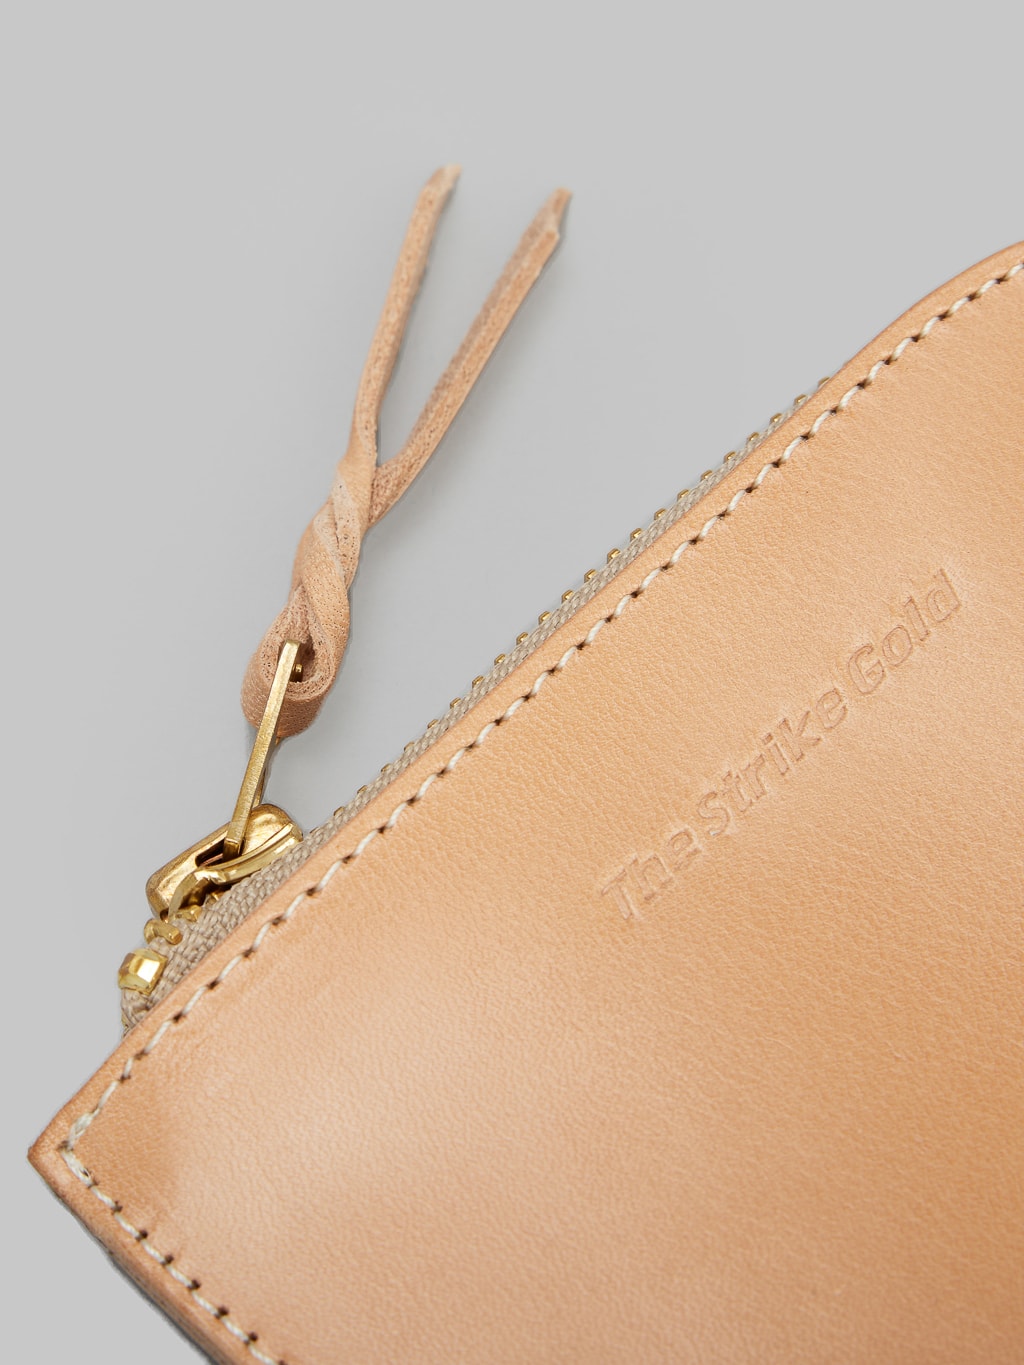 The Strike Gold Leather Zip Wallet Natural artisanal engraved logo